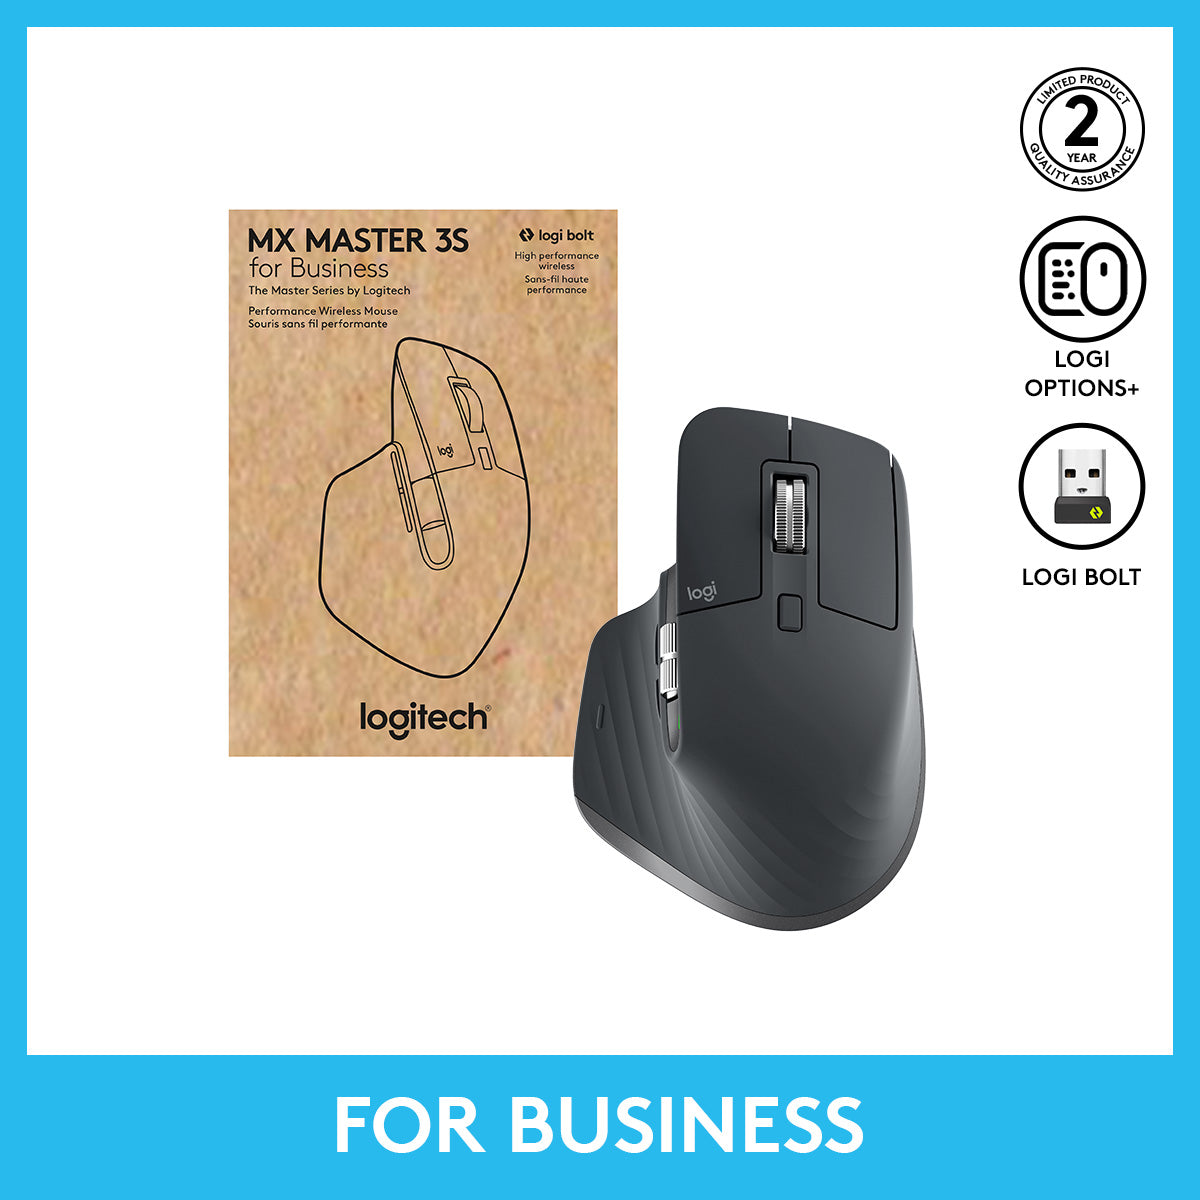 MX MASTER 3S for Business 高階靜音智能滑鼠 (石墨灰) - 2B